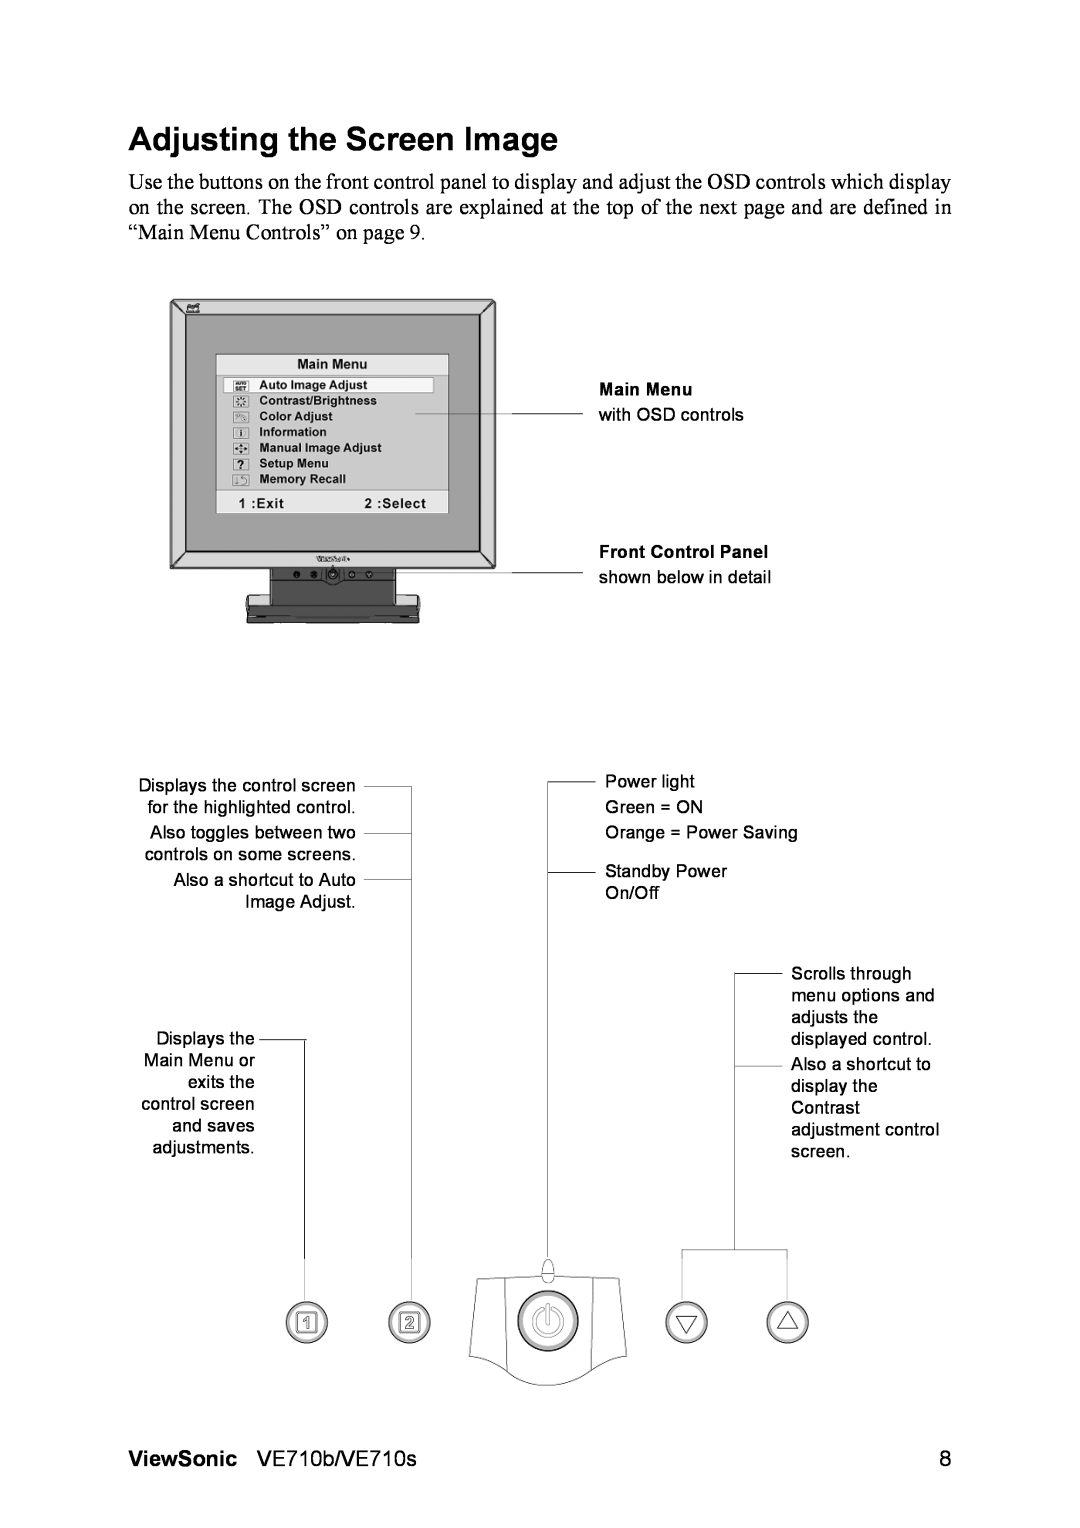 ViewSonic VE710b manual Adjusting the Screen Image, Main Menu, Front Control Panel 